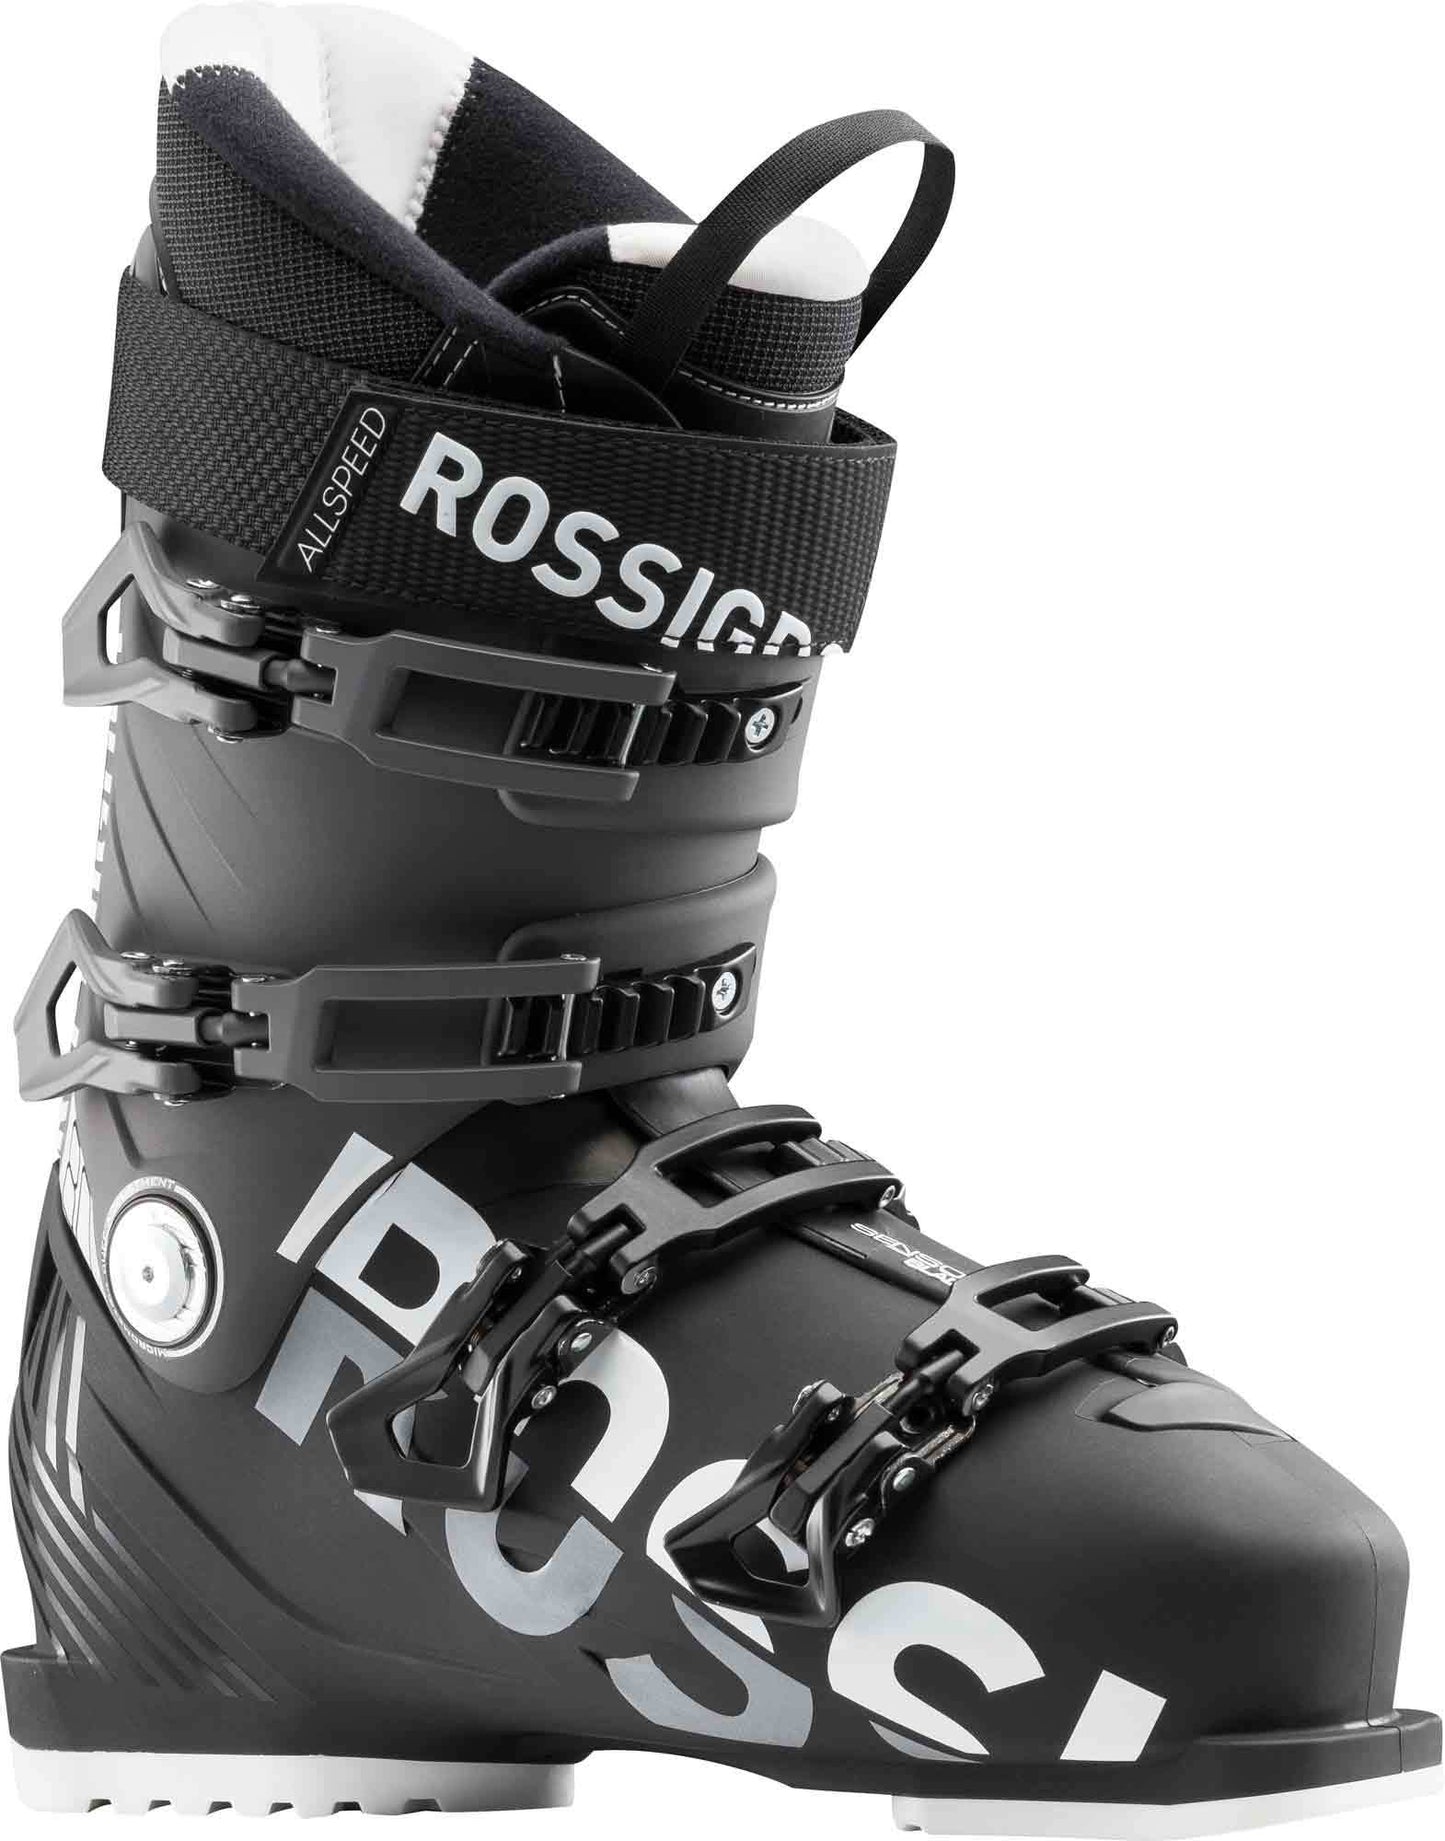 Rossignol Allspeed 80 Ski Boot 2018